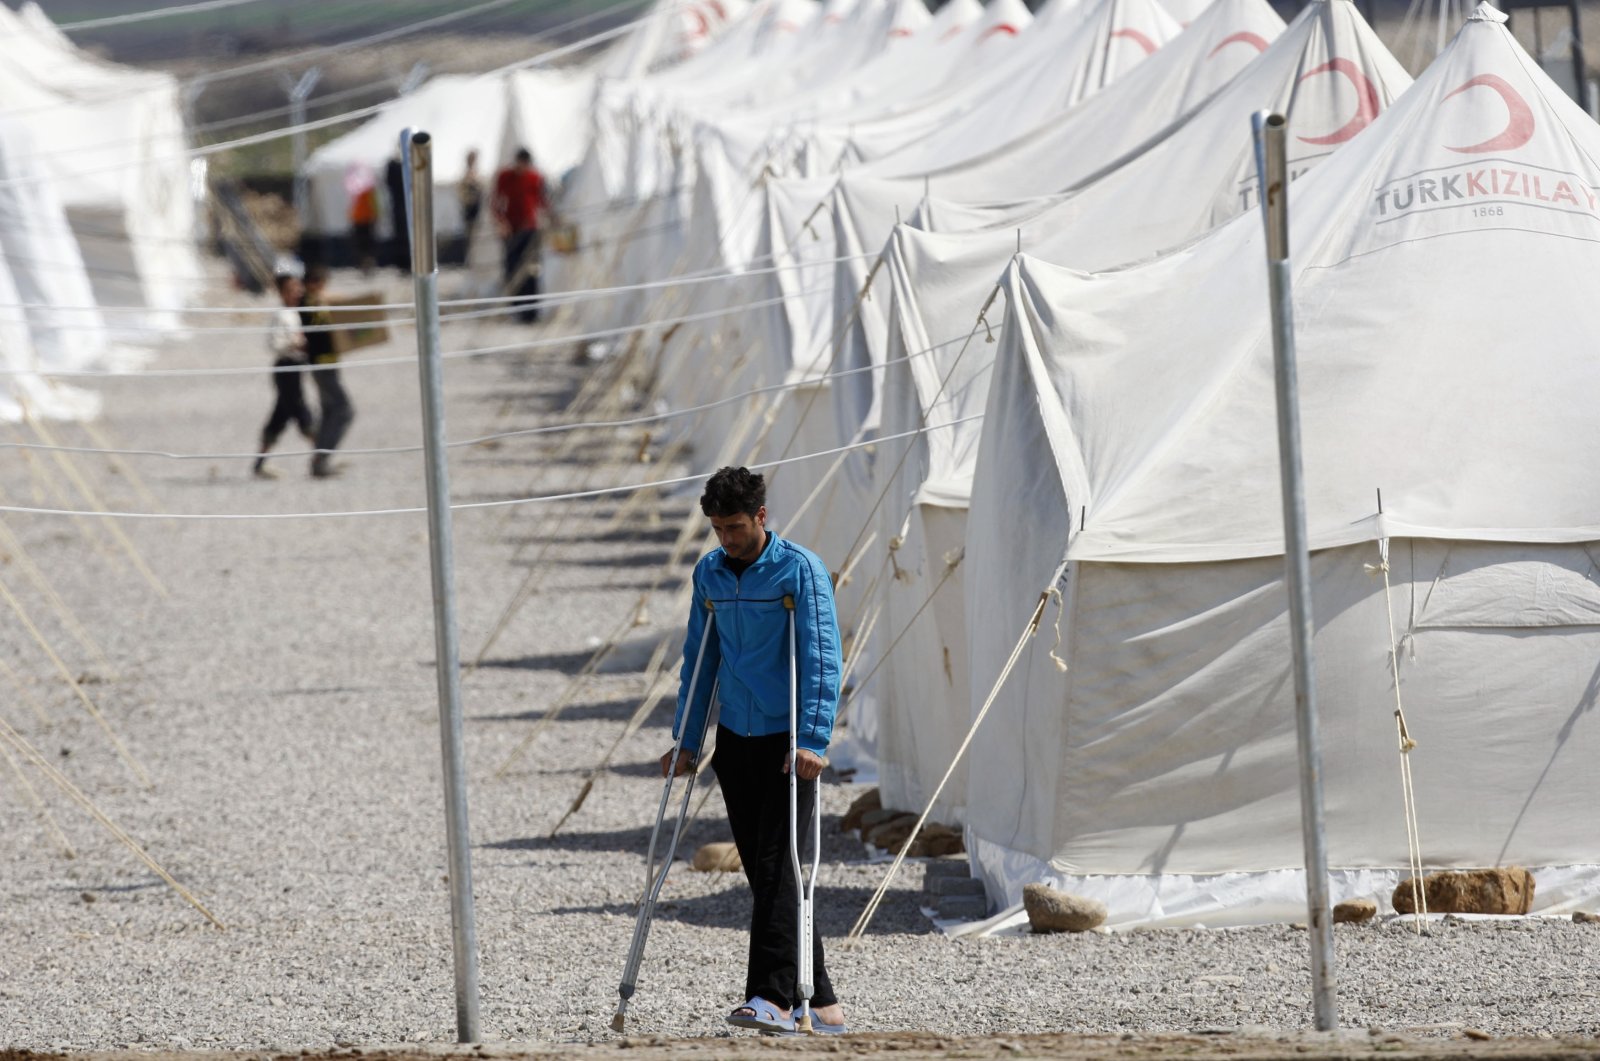 Turki menampung lebih dari 5 juta migran, kata wakil menteri dalam negeri